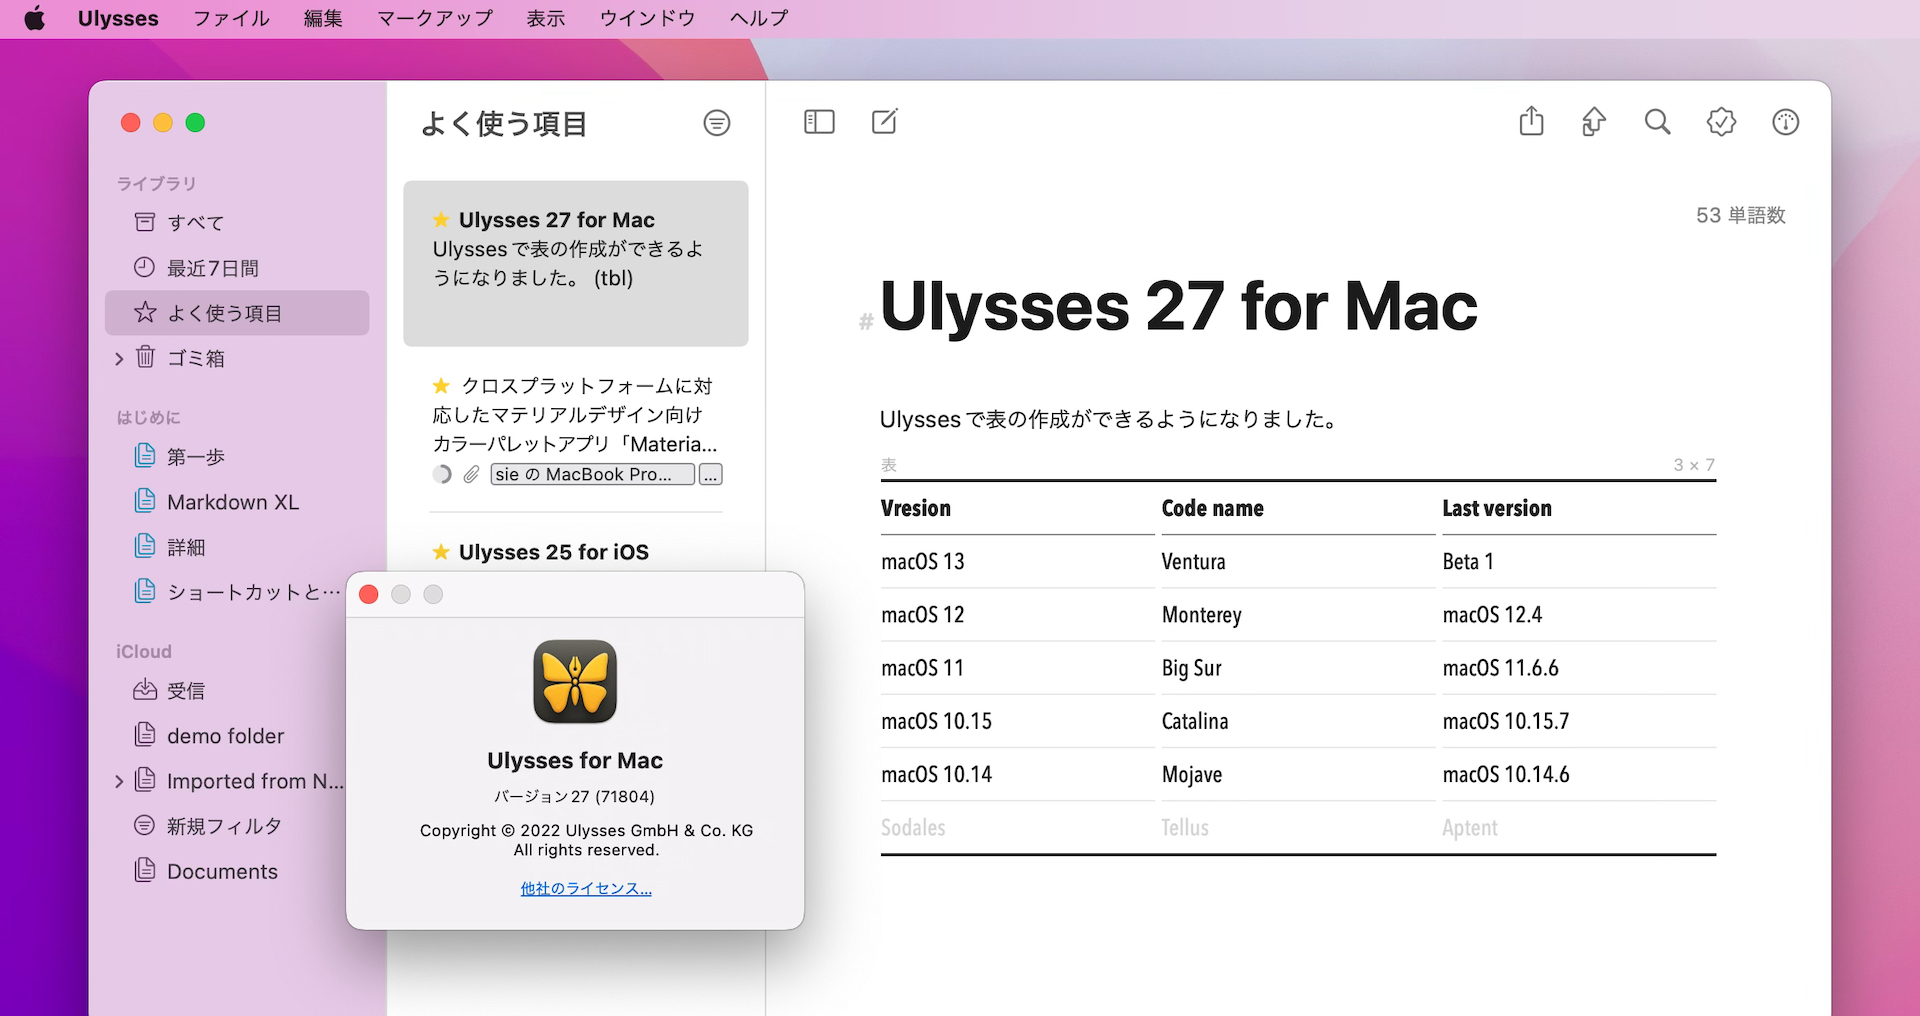 Ulysses 27 for Mac